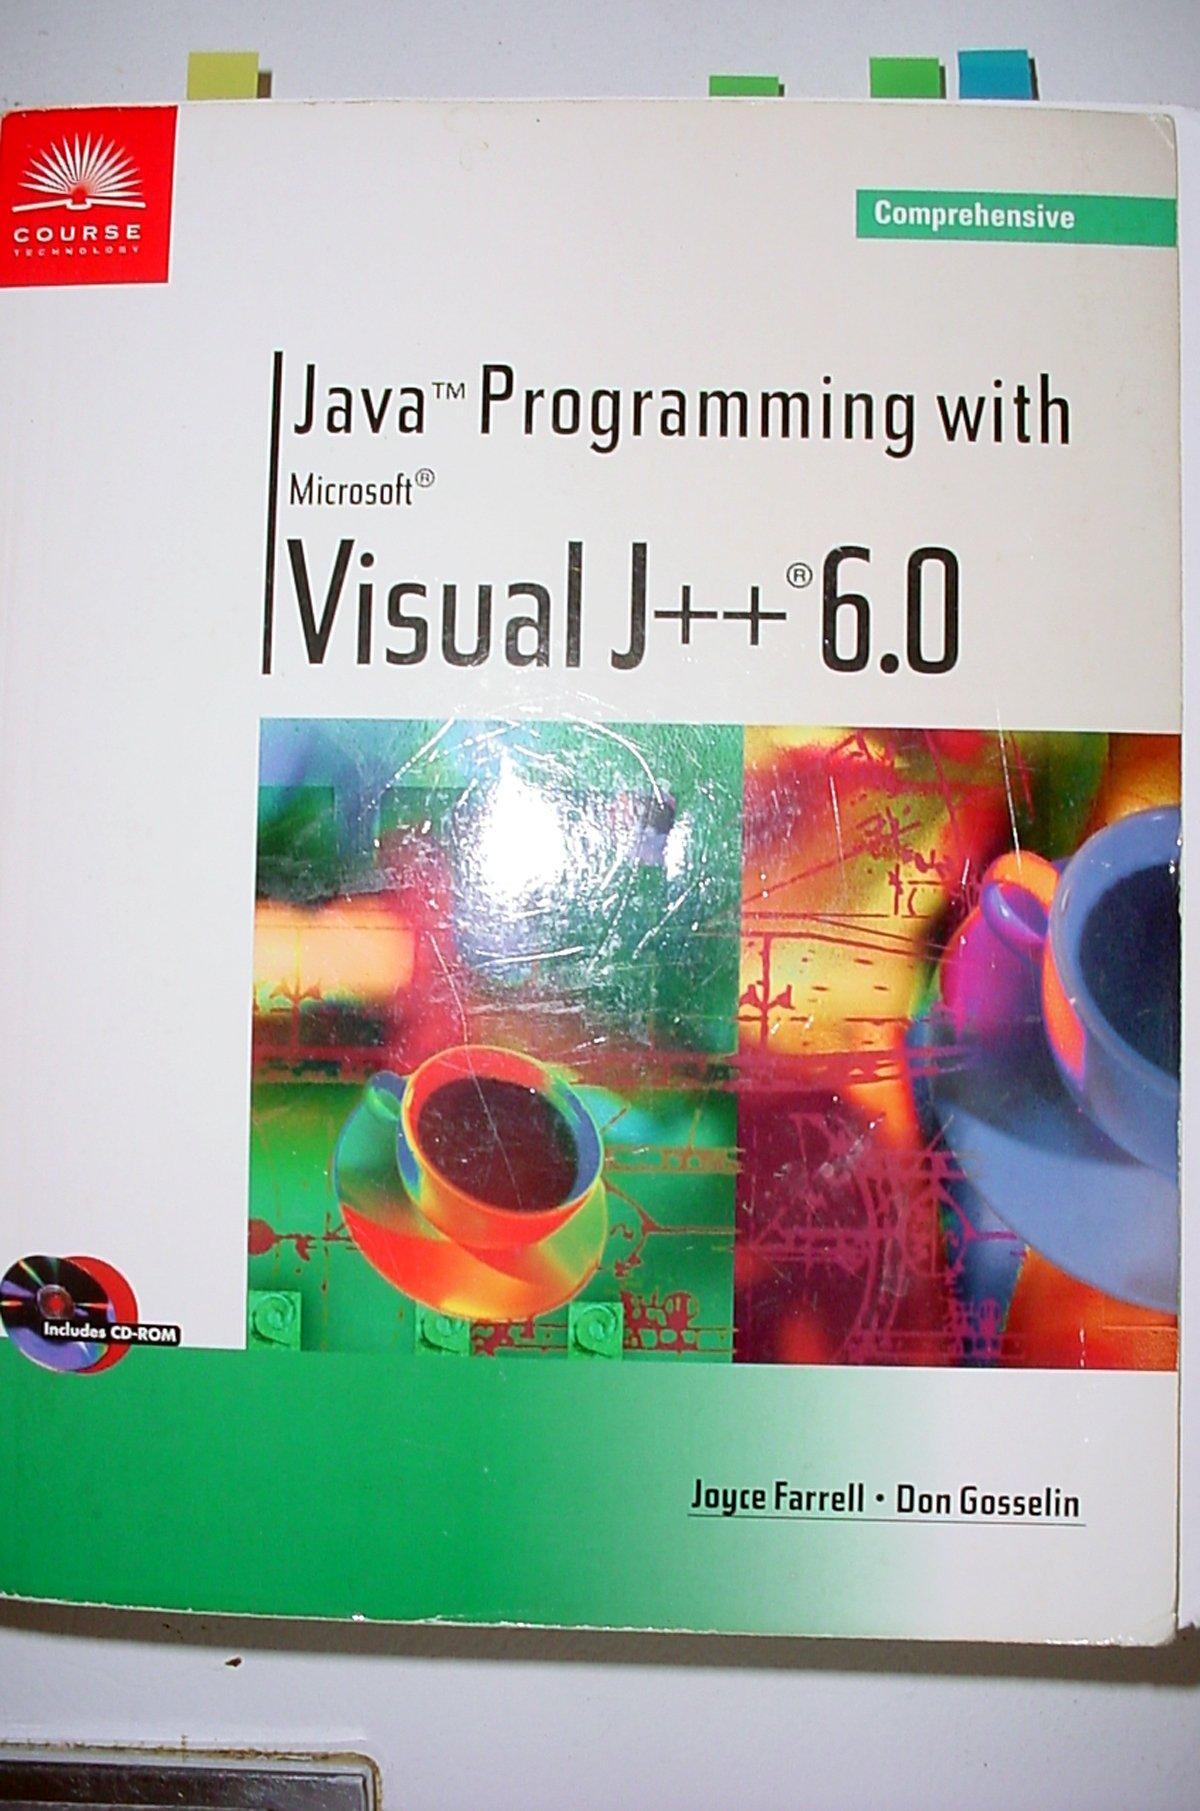 java programming with microsoft visual j++ 6.0 comprehensive 1st edition joyce farrell, dan gosselin